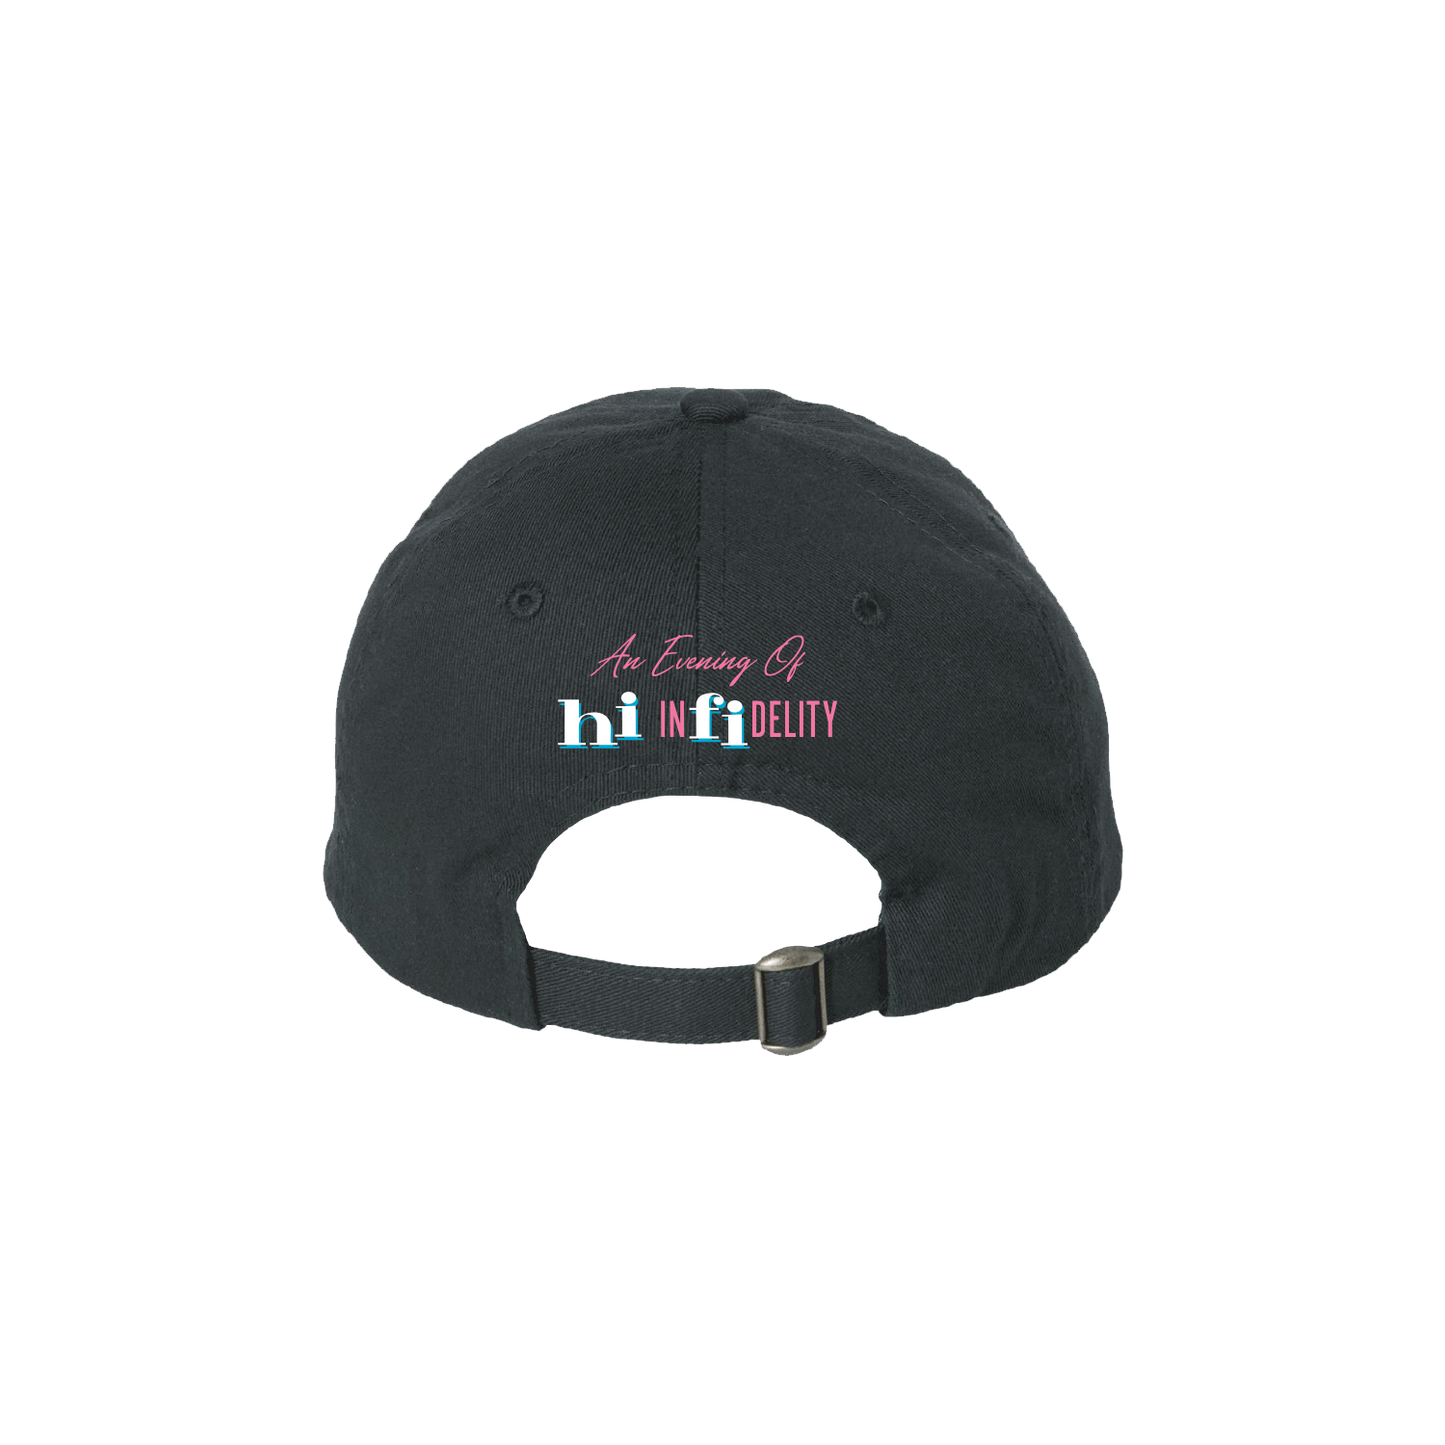 REO Speedwagon "A night of Hi Infidelity" snapback hat